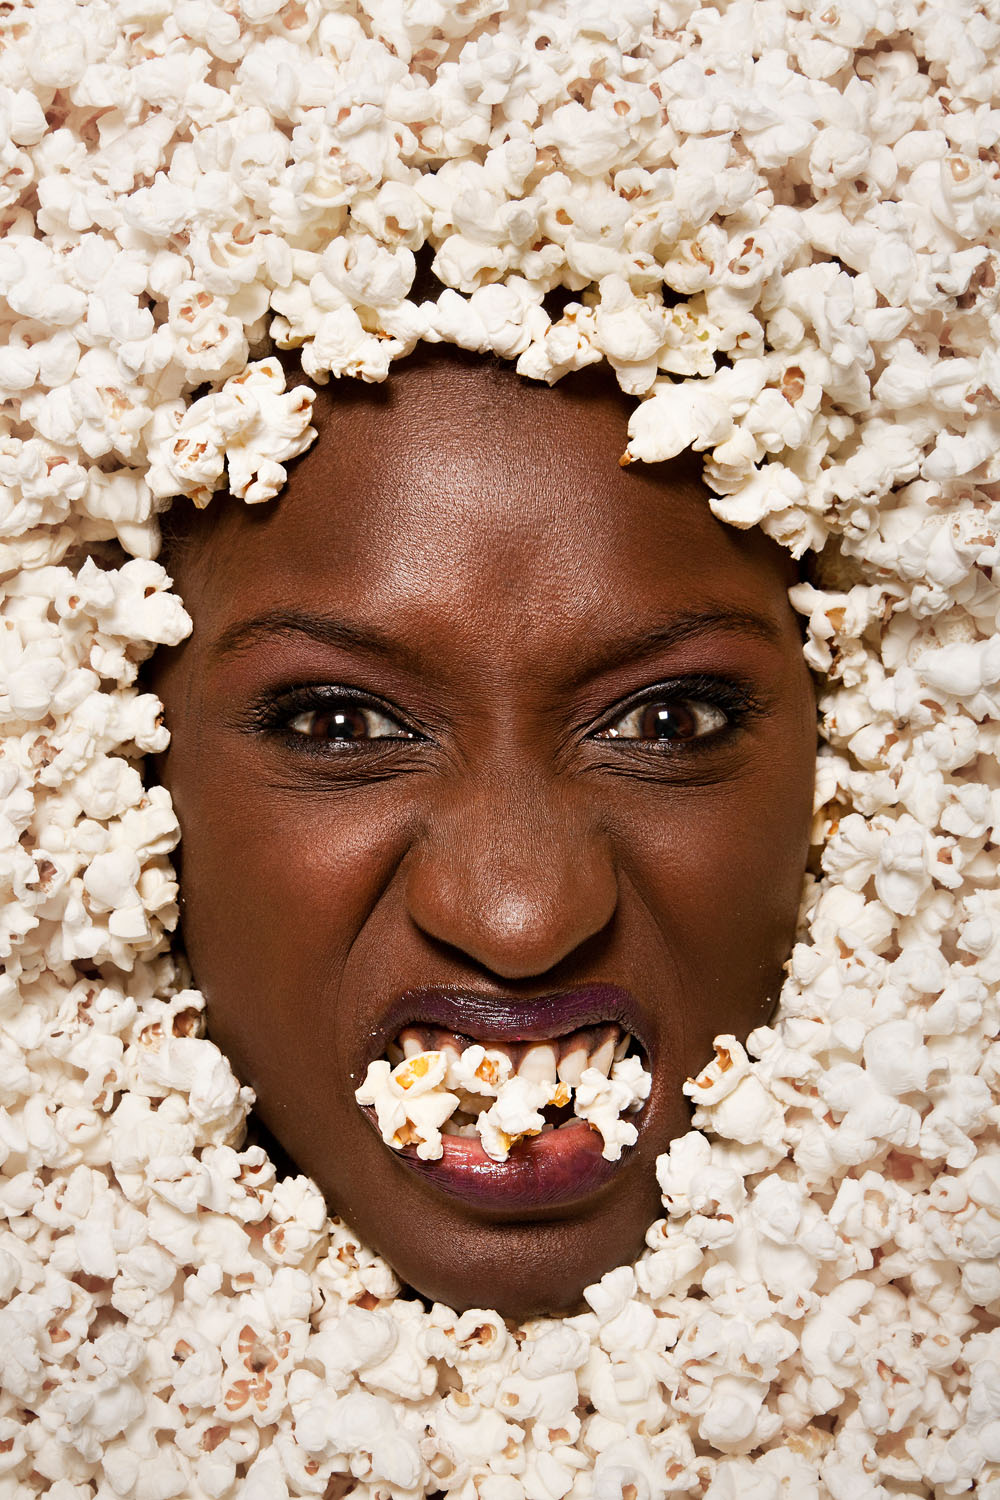 popcorn munch_take 2_desaturate_make-up addition.jpg